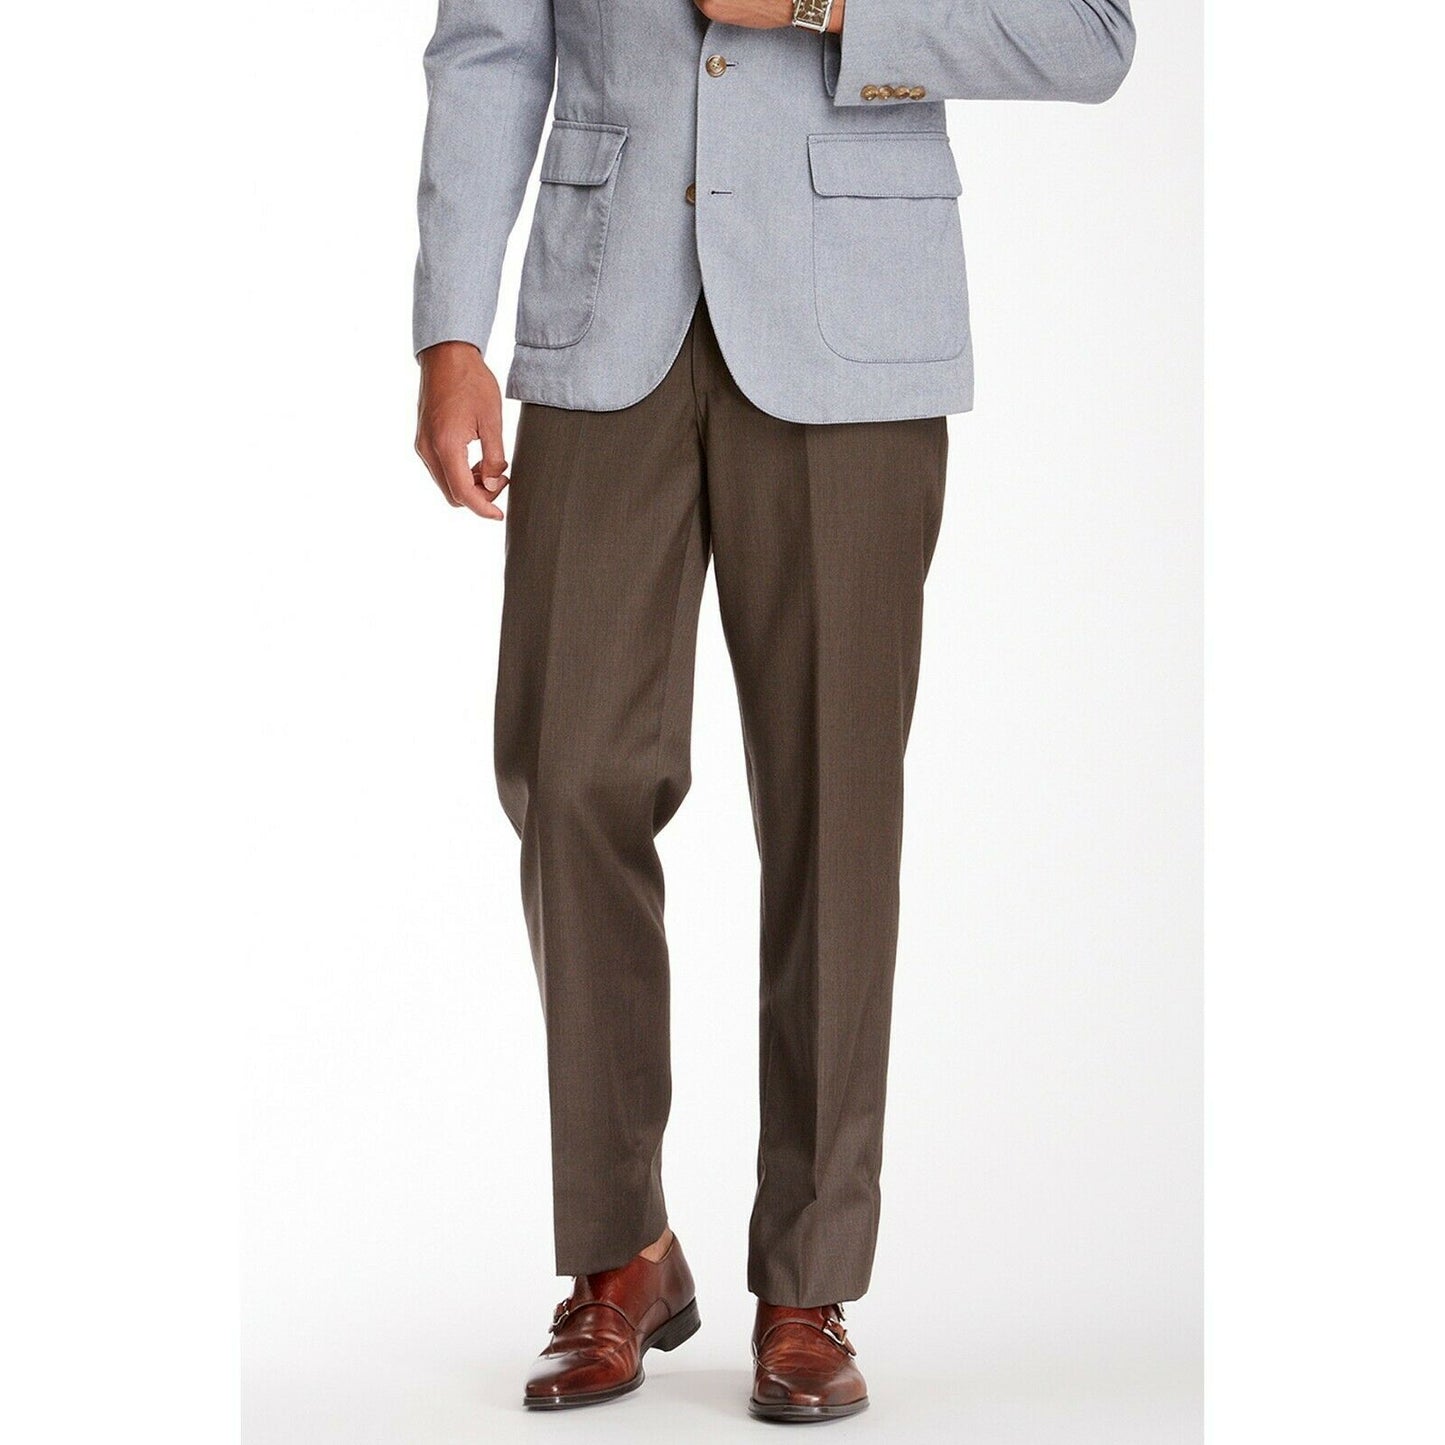 Ike Behar Mens Tan Wool Flat Front Dress Suit Slacks Pants 36 NWT